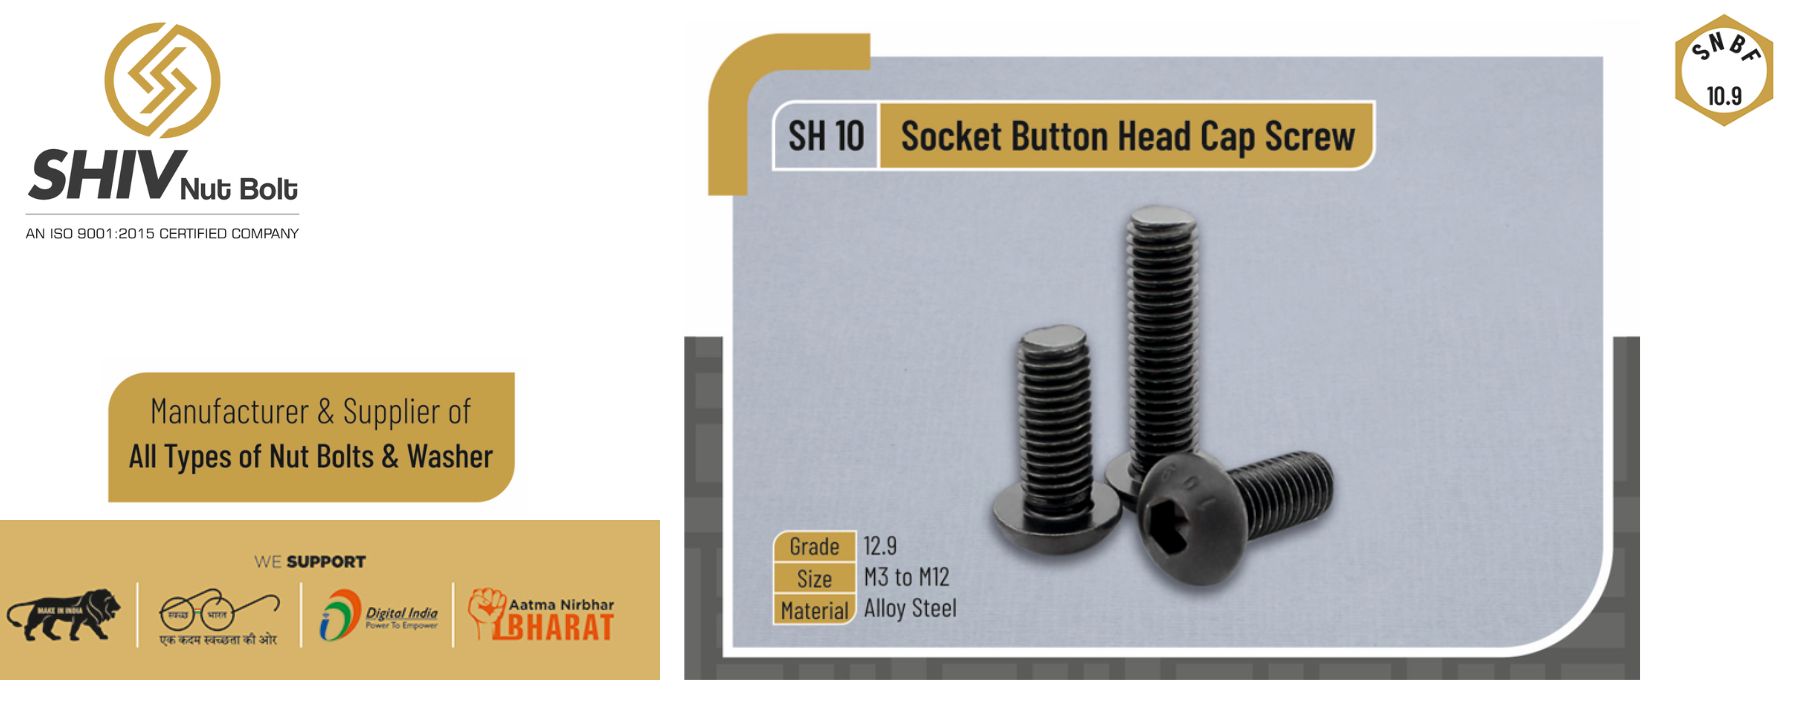 Socket Button Head Cap Screw